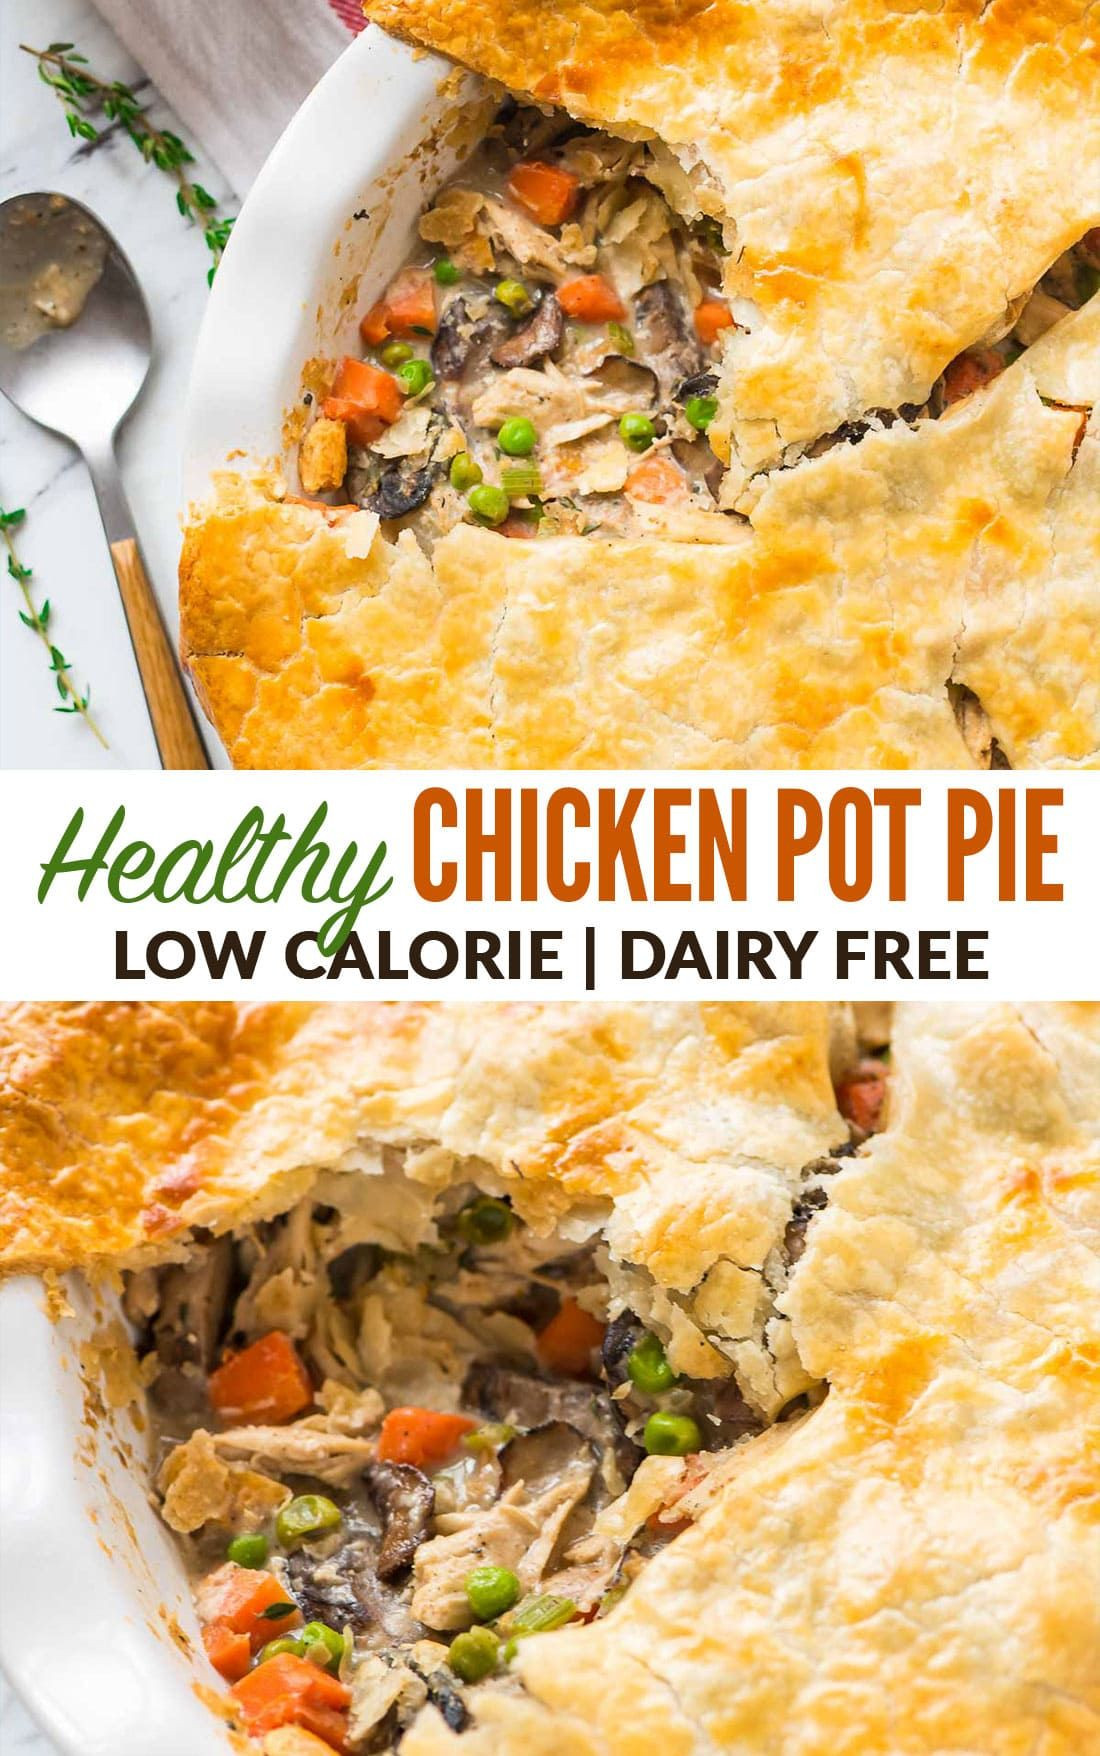 Low Calorie Chicken Pot Pie Recipe
 Healthy Chicken Pot Pie Easy low calorie only 380